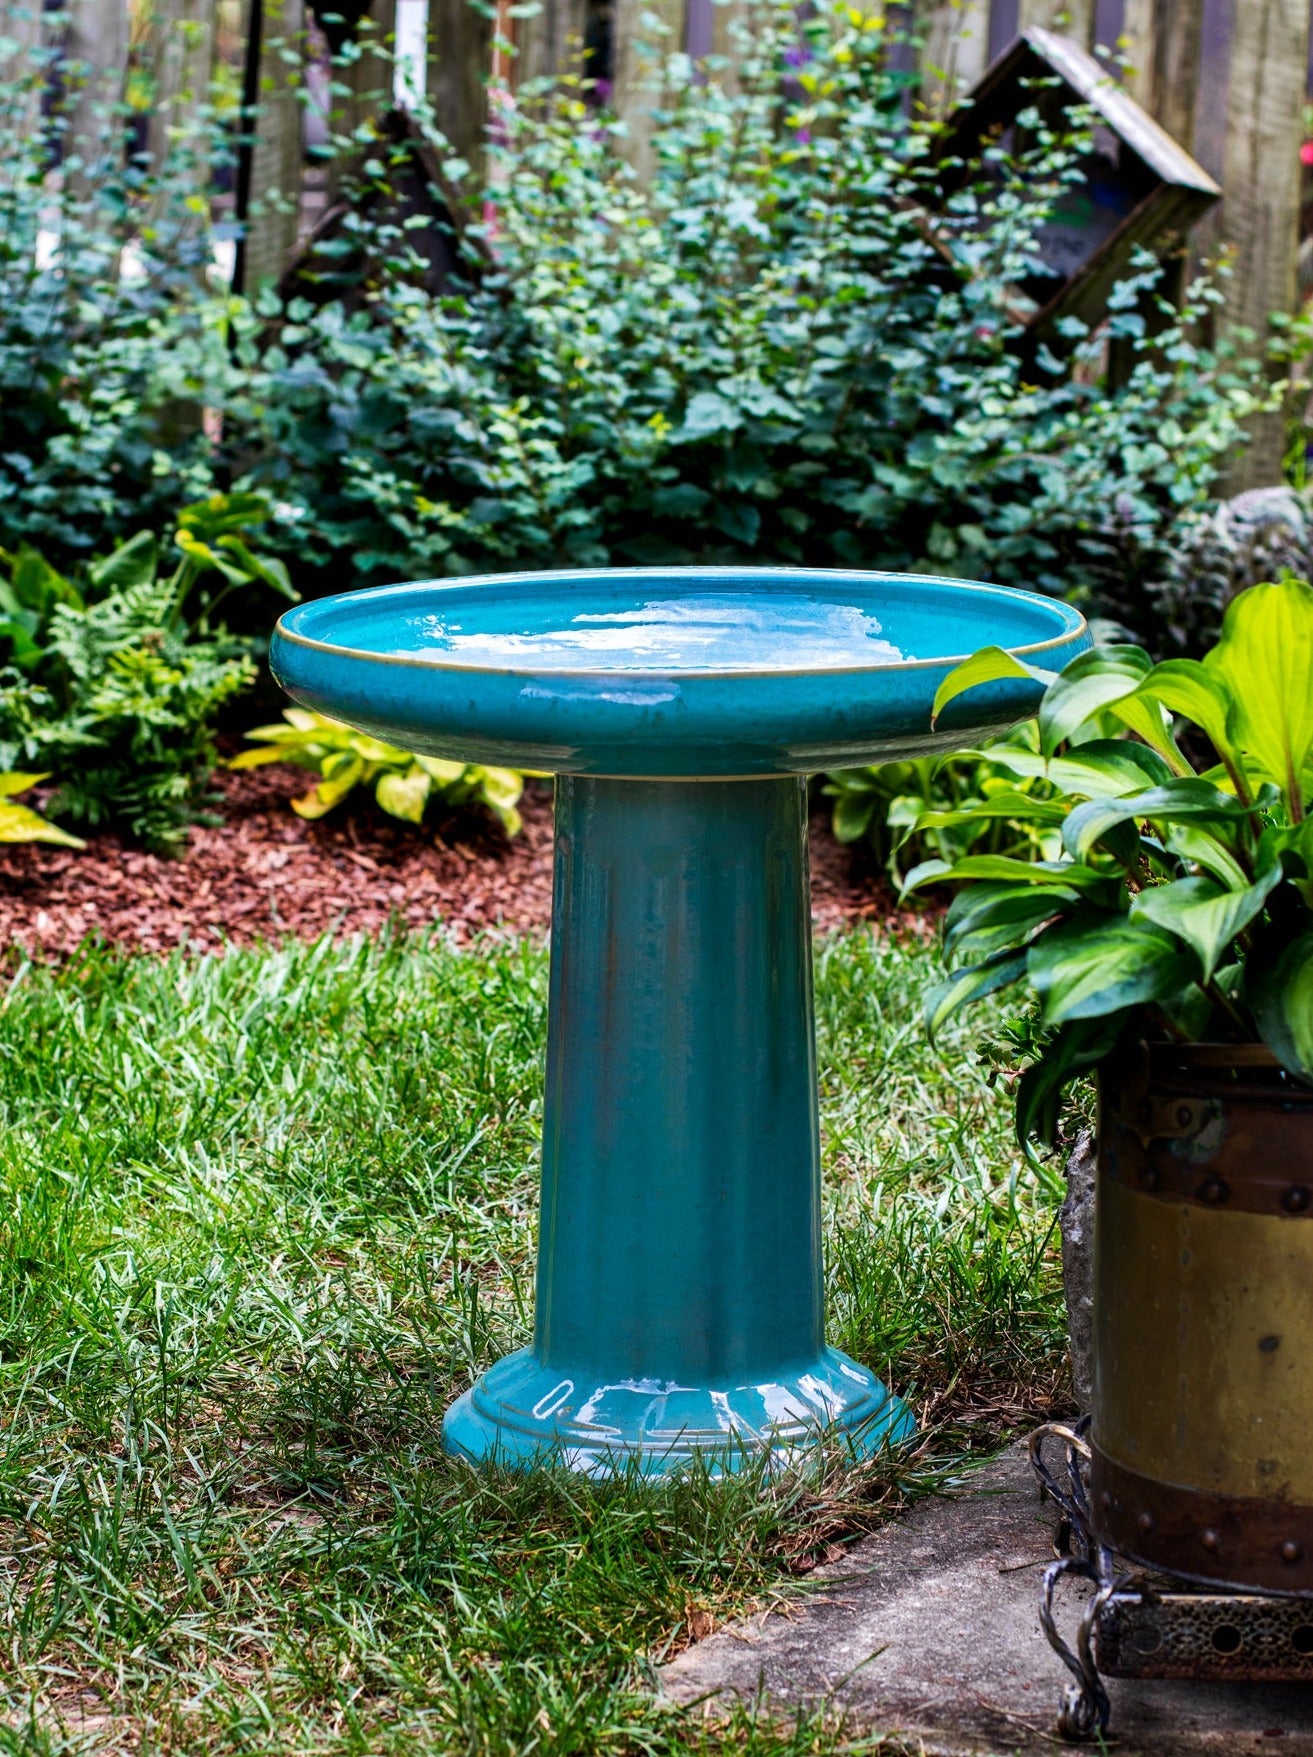 ceramic turquoise birdbath with column design in a landscaped garden setting